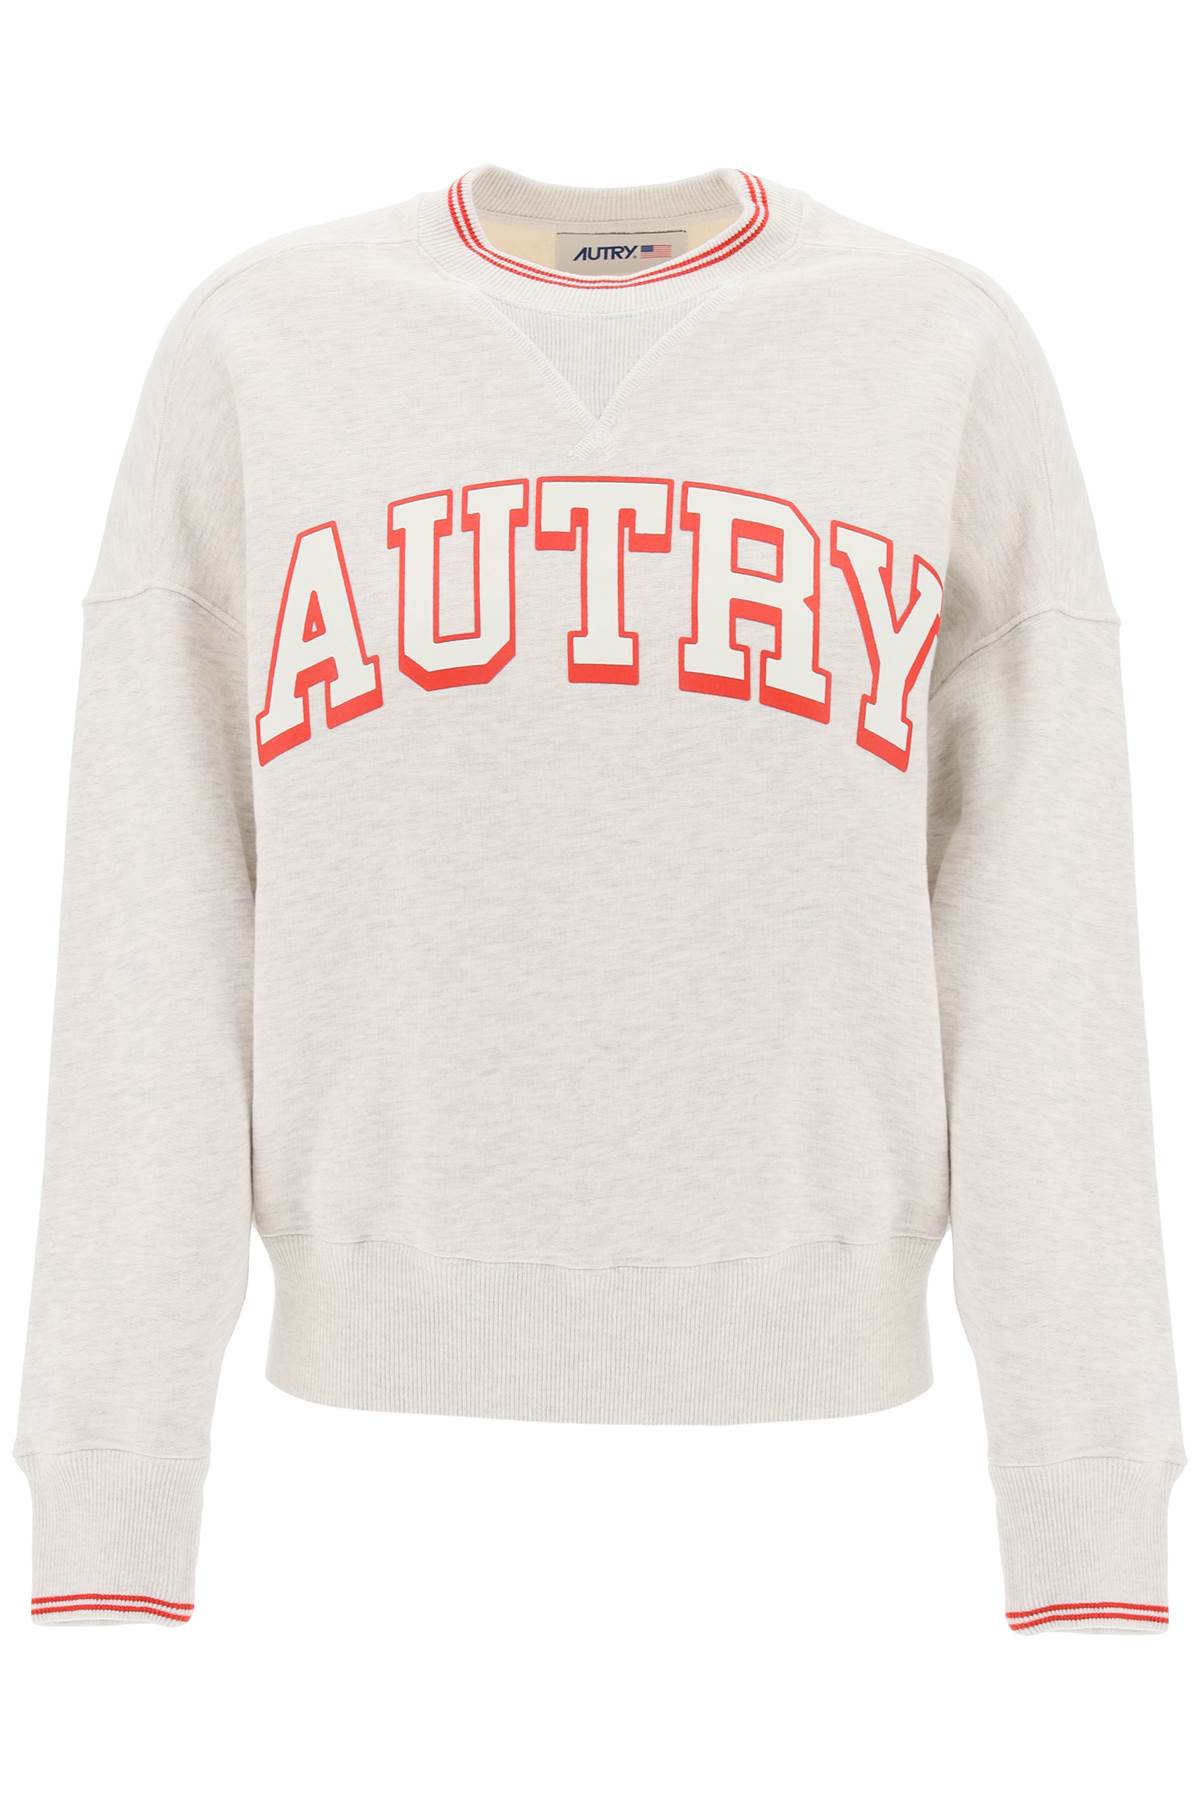 Autry oversized varsity sweatshirt-0